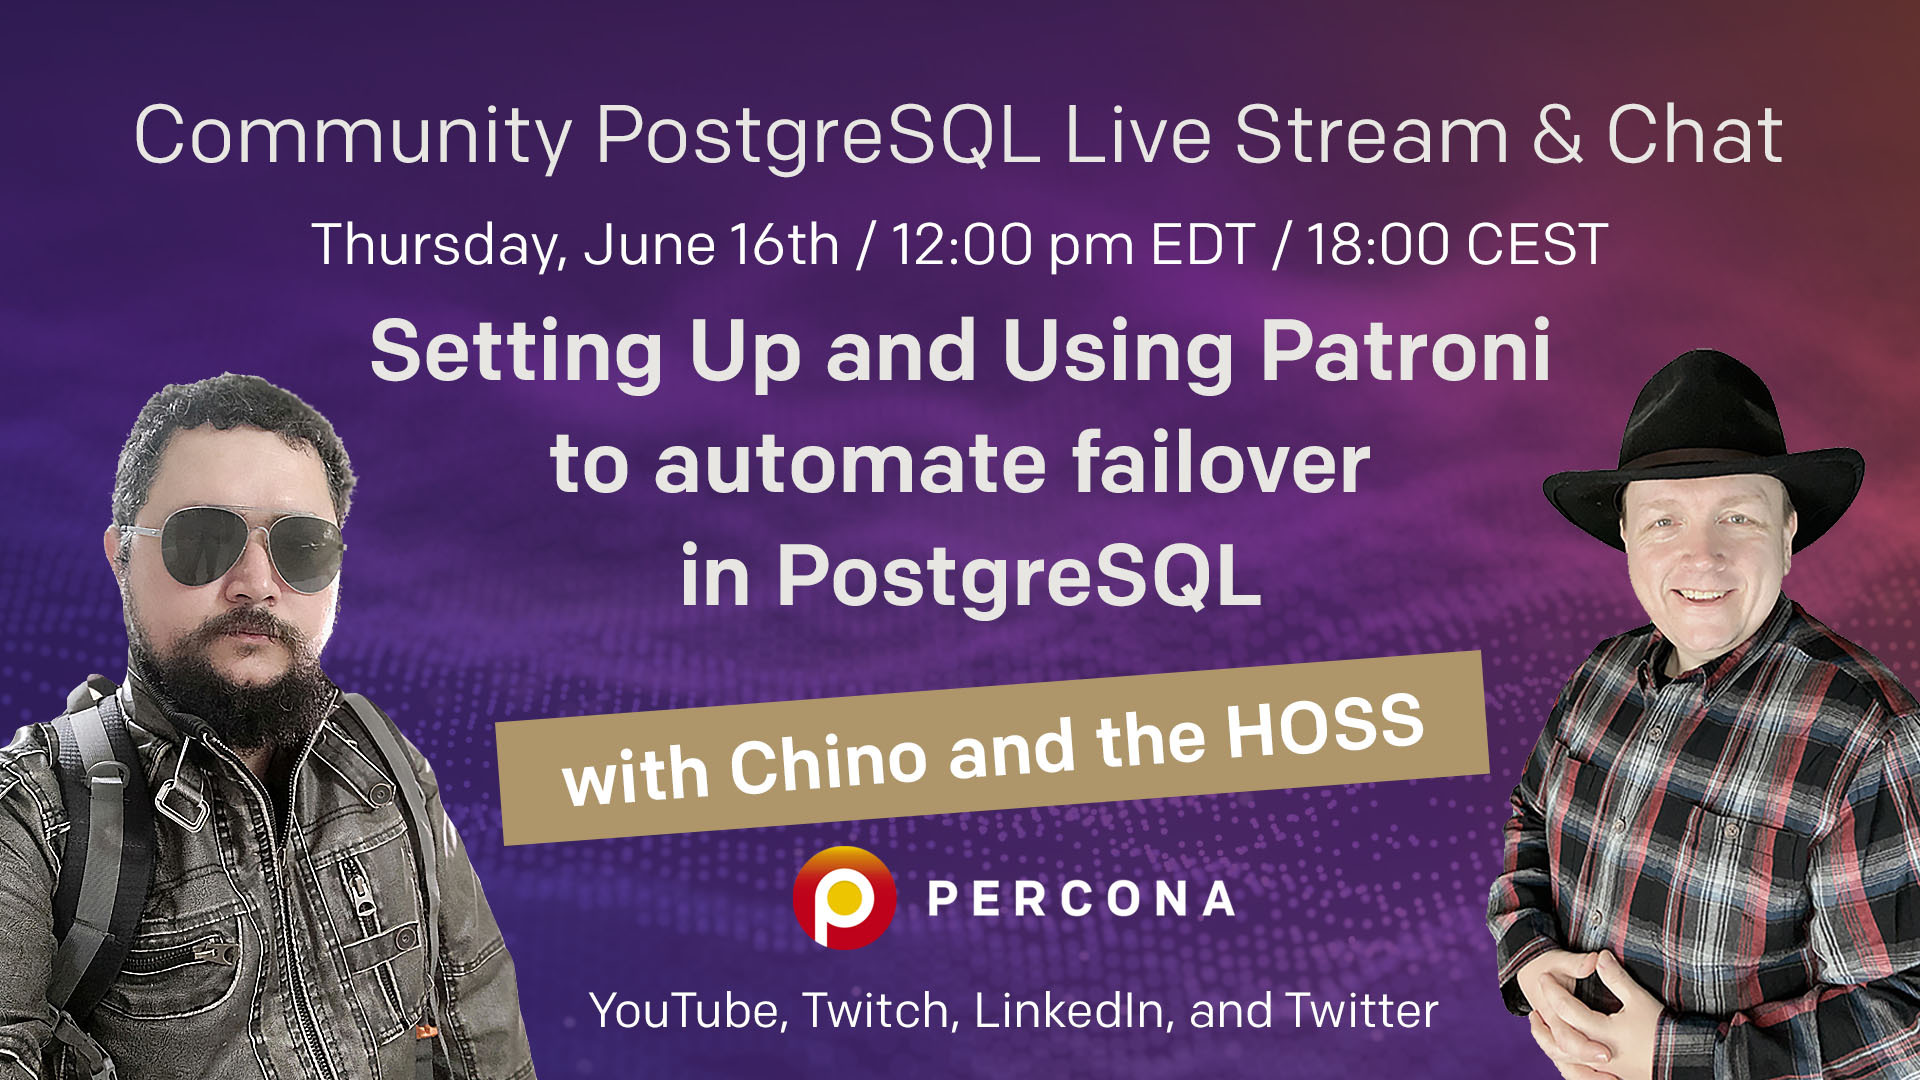 Percona Community PostgreSQL Live Stream & Chat - June 16th